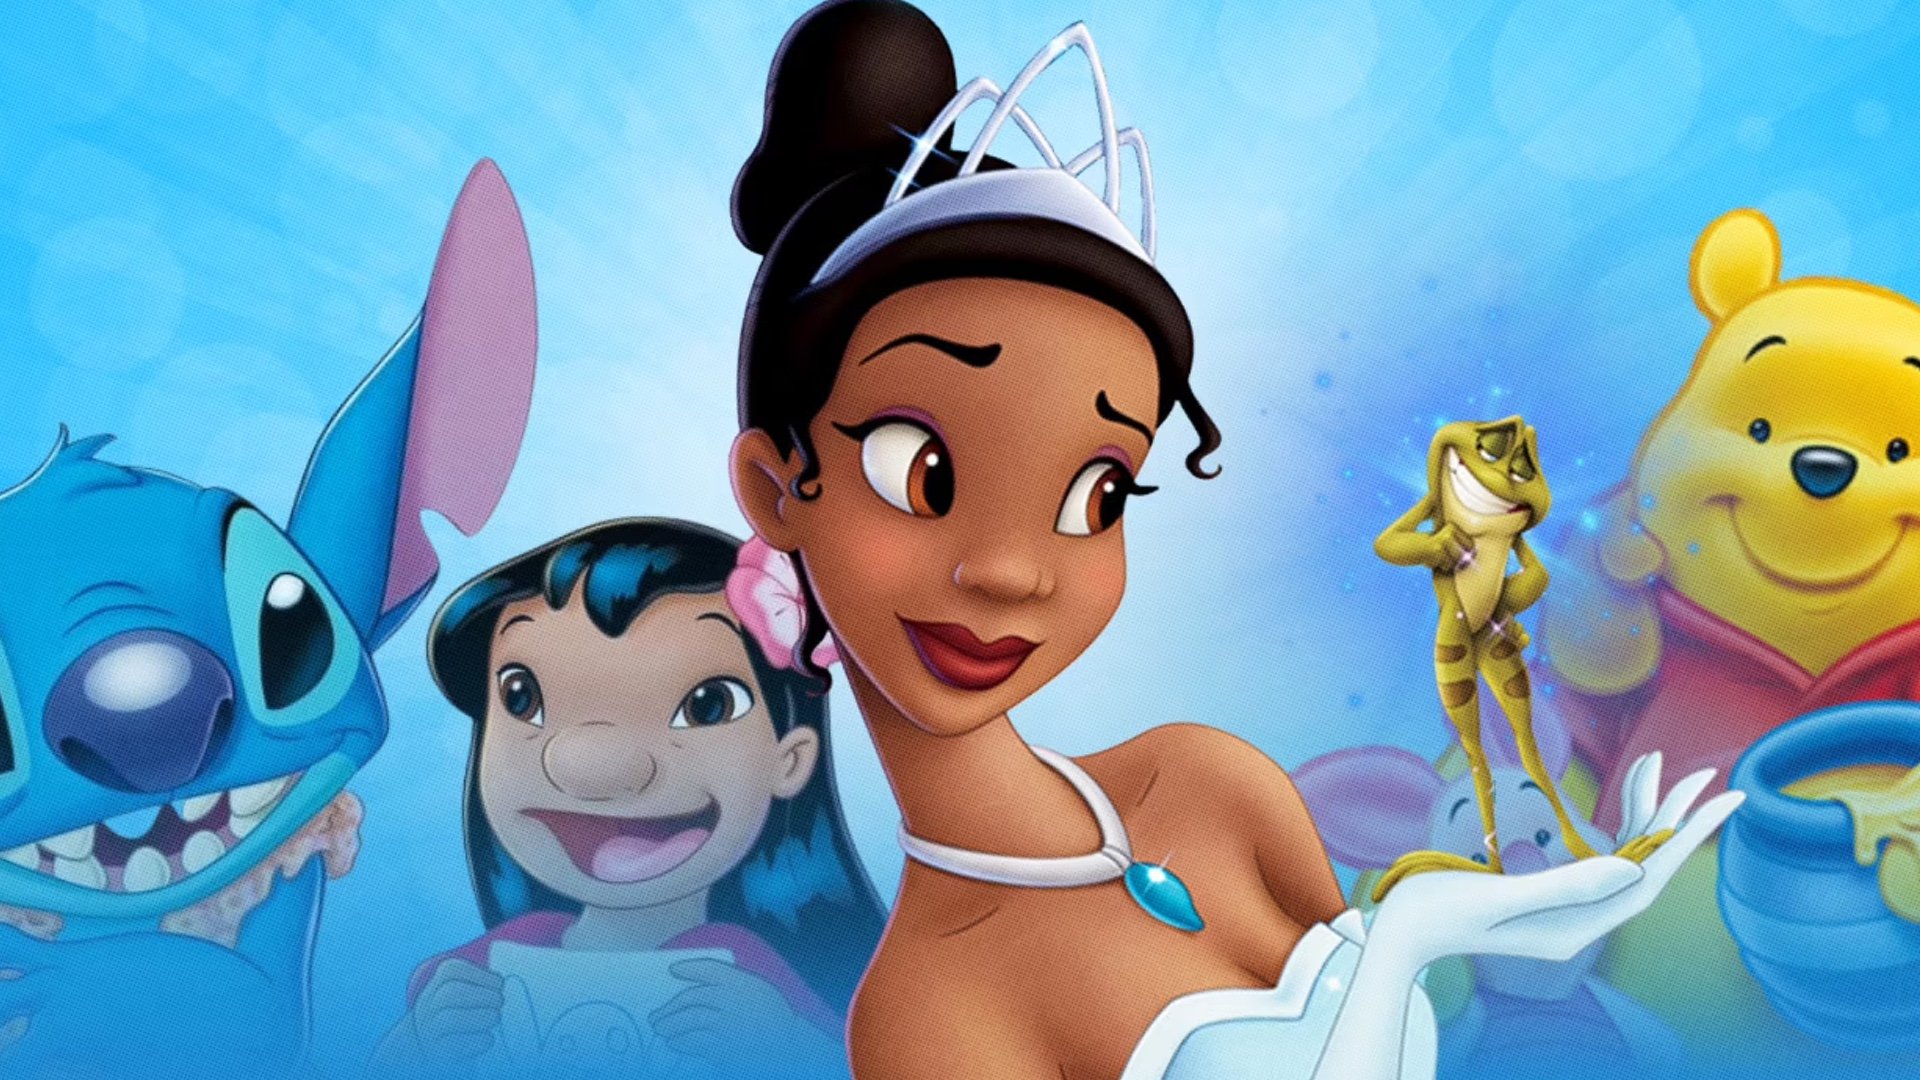 Disney Needs to Start Focusing on Animation Again